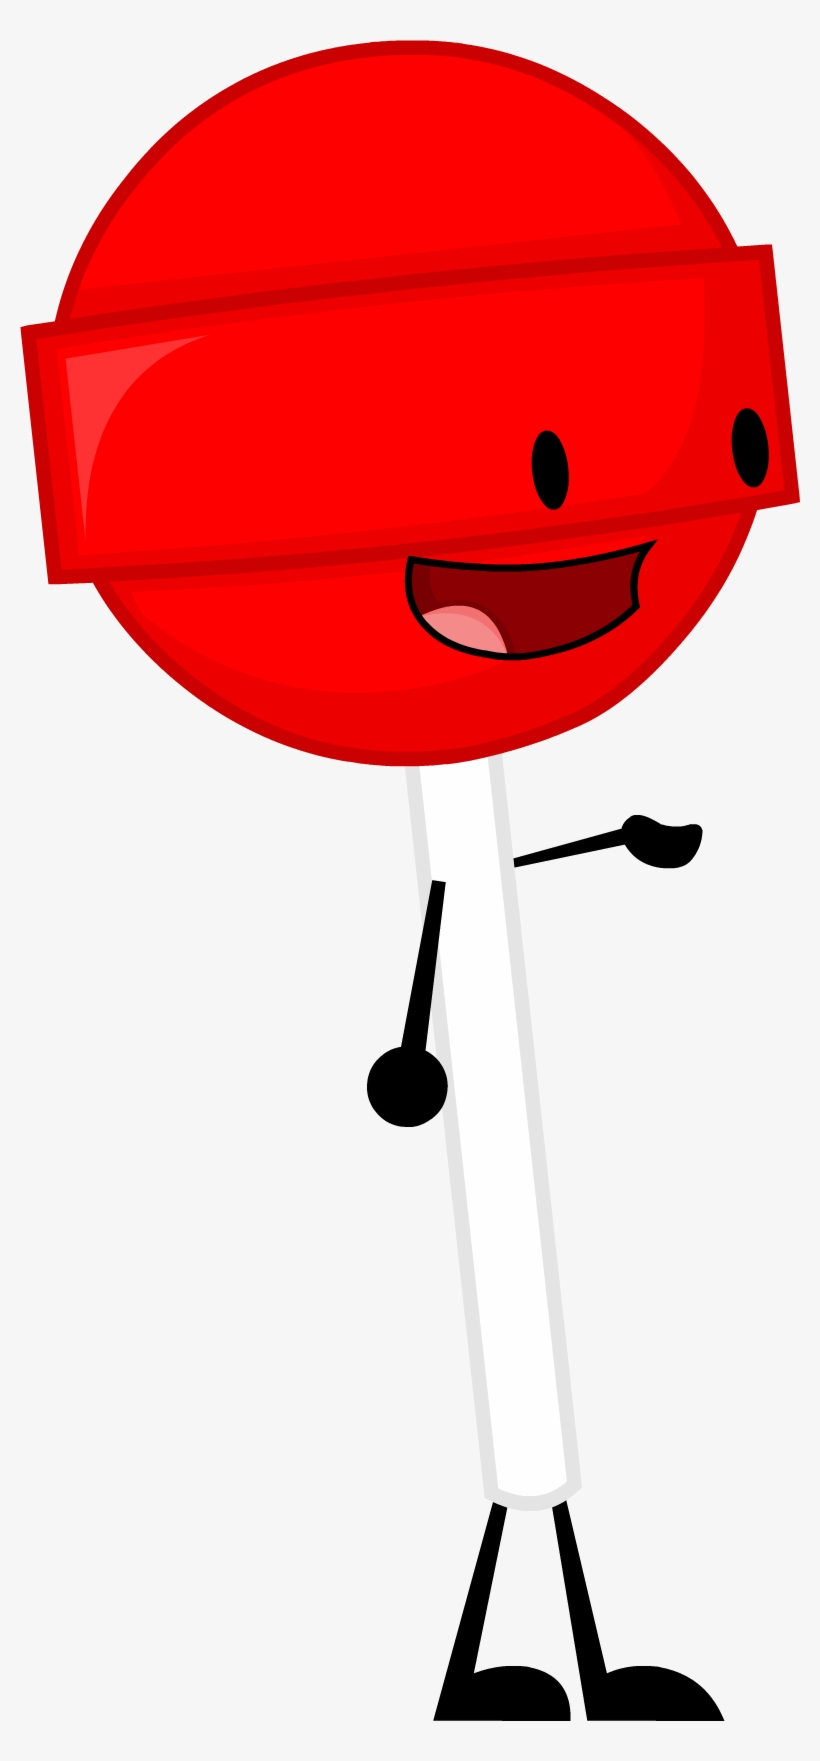 Aw-lollipop - Bfdi Red Lollipop, transparent png #979363